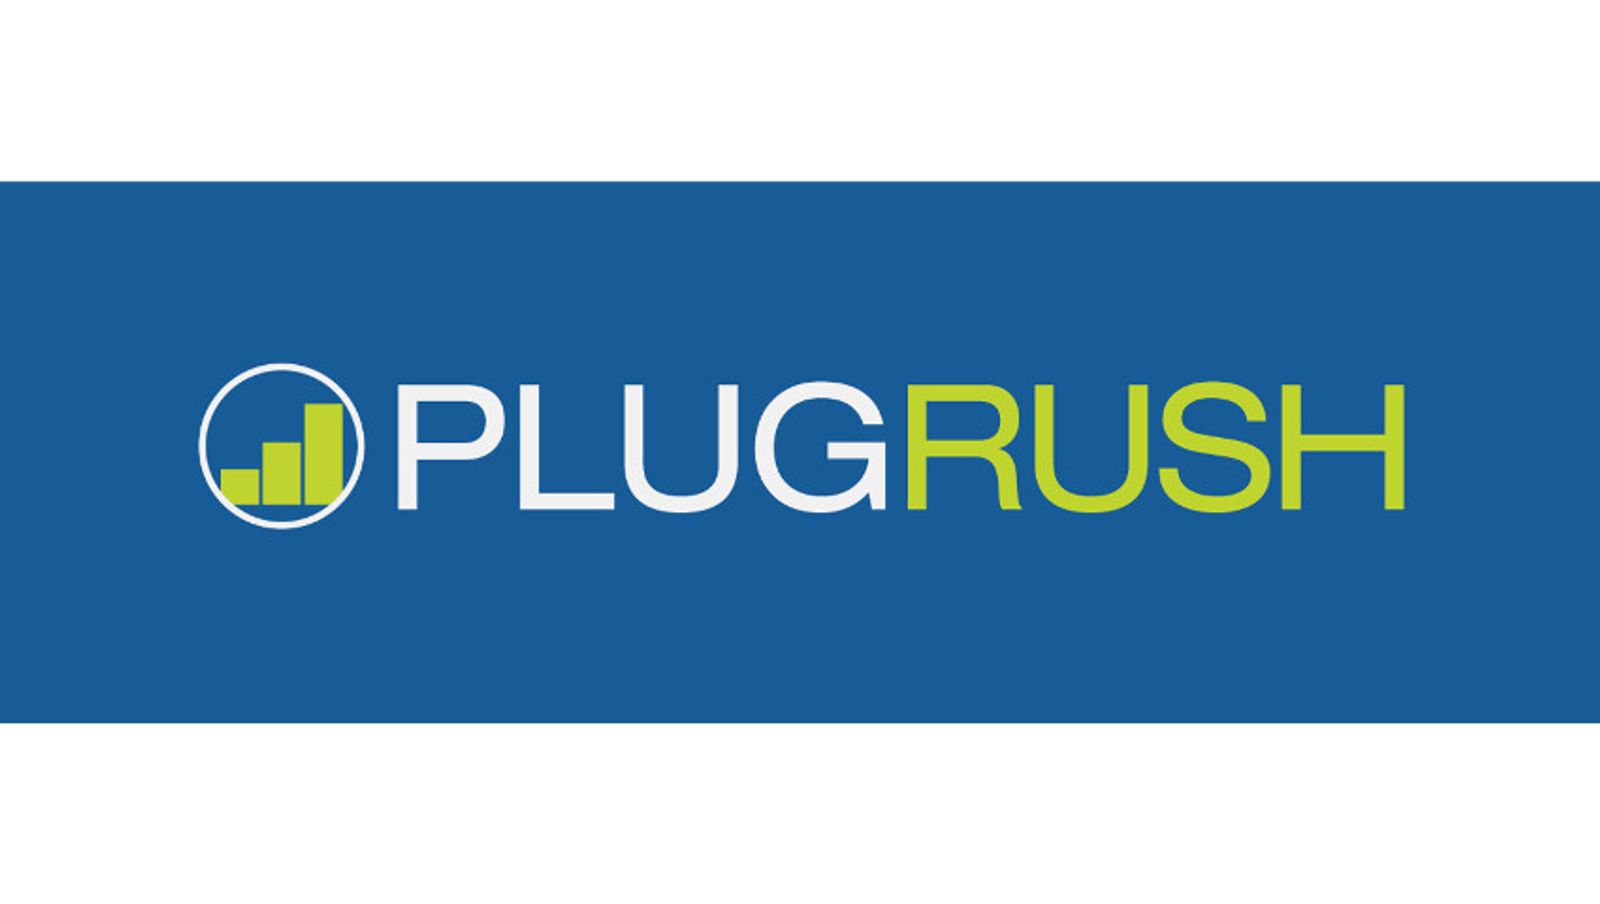 PlugRush Introduces Automated Rules